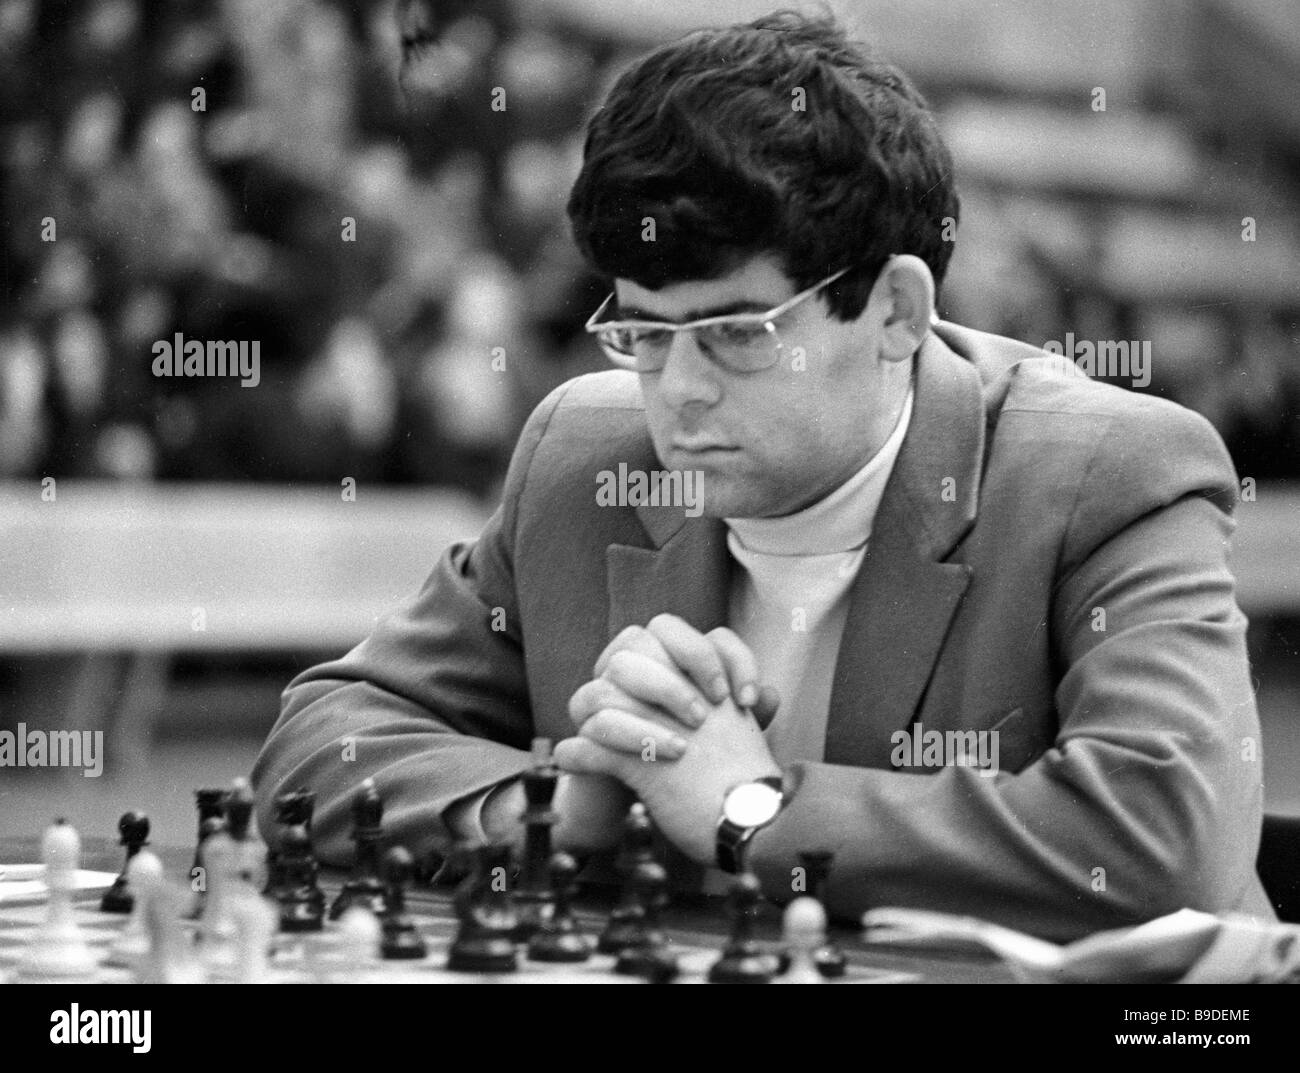 Master of Sports Chess Mark Dvoretsky during chess match Stock Photo - Alamy